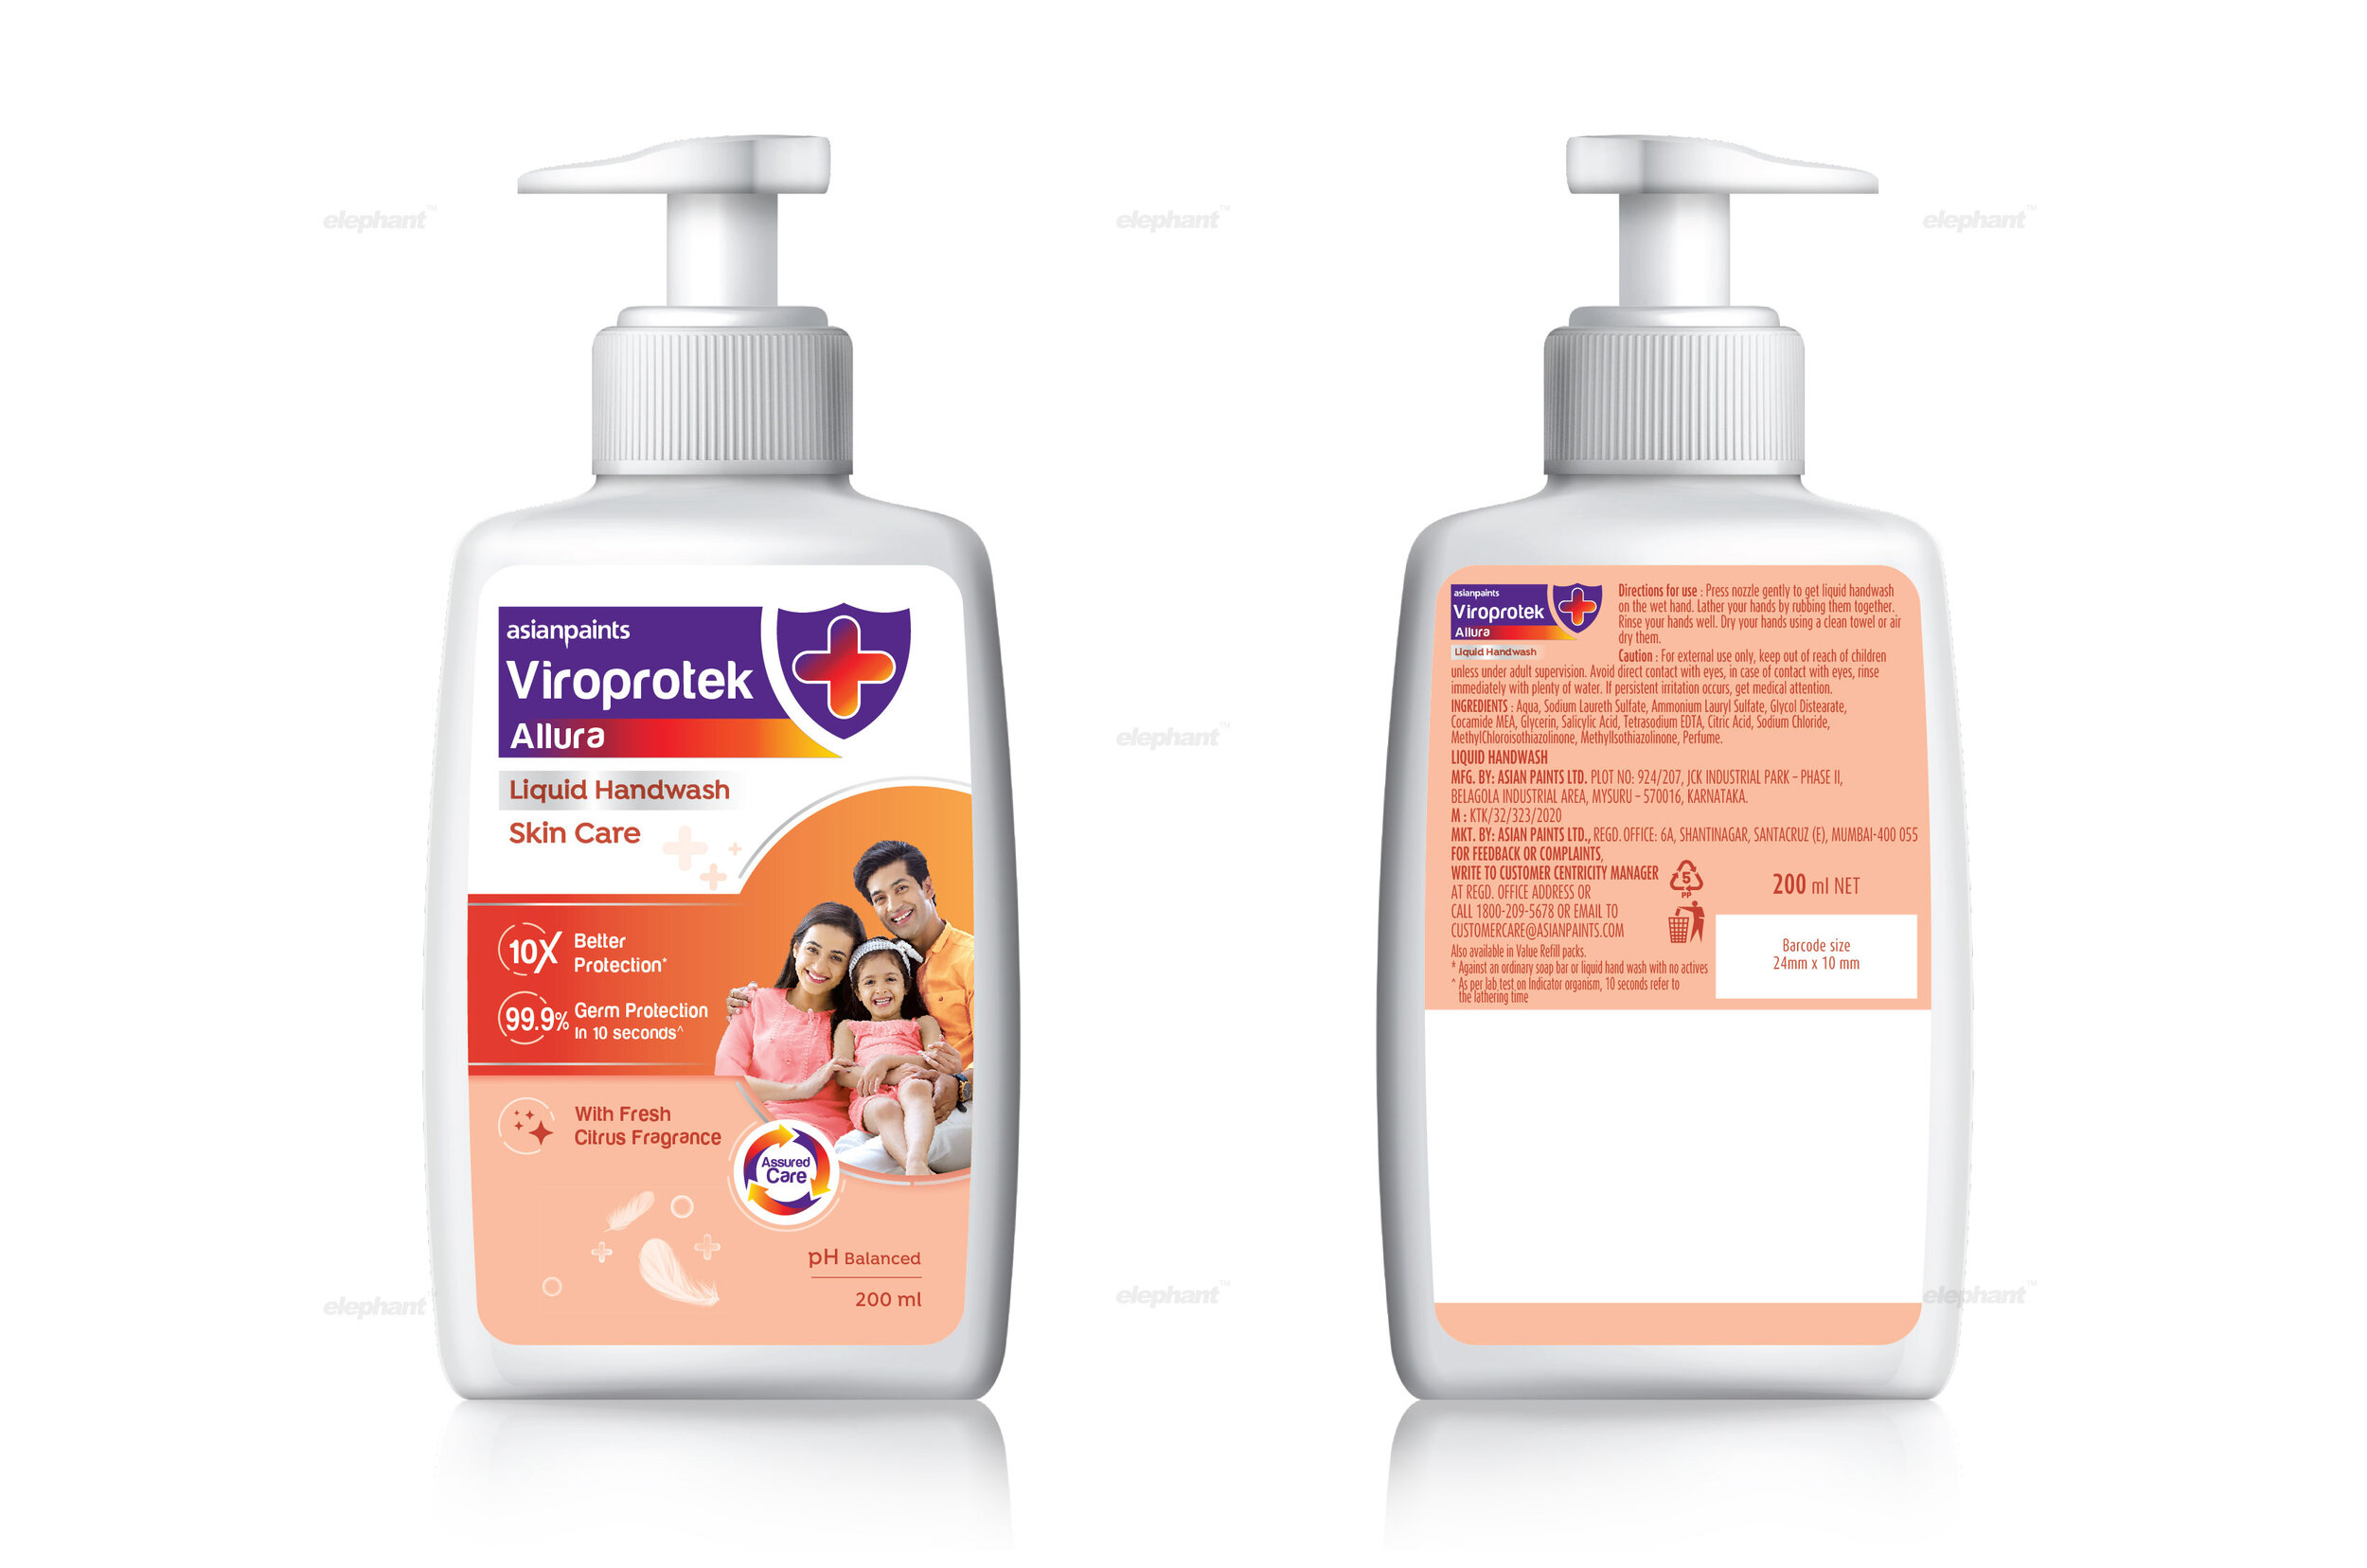 AsianPaintsViroprotek_packagingdesign_communictiondesign_elephantdesign_india_singapore_1.jpg